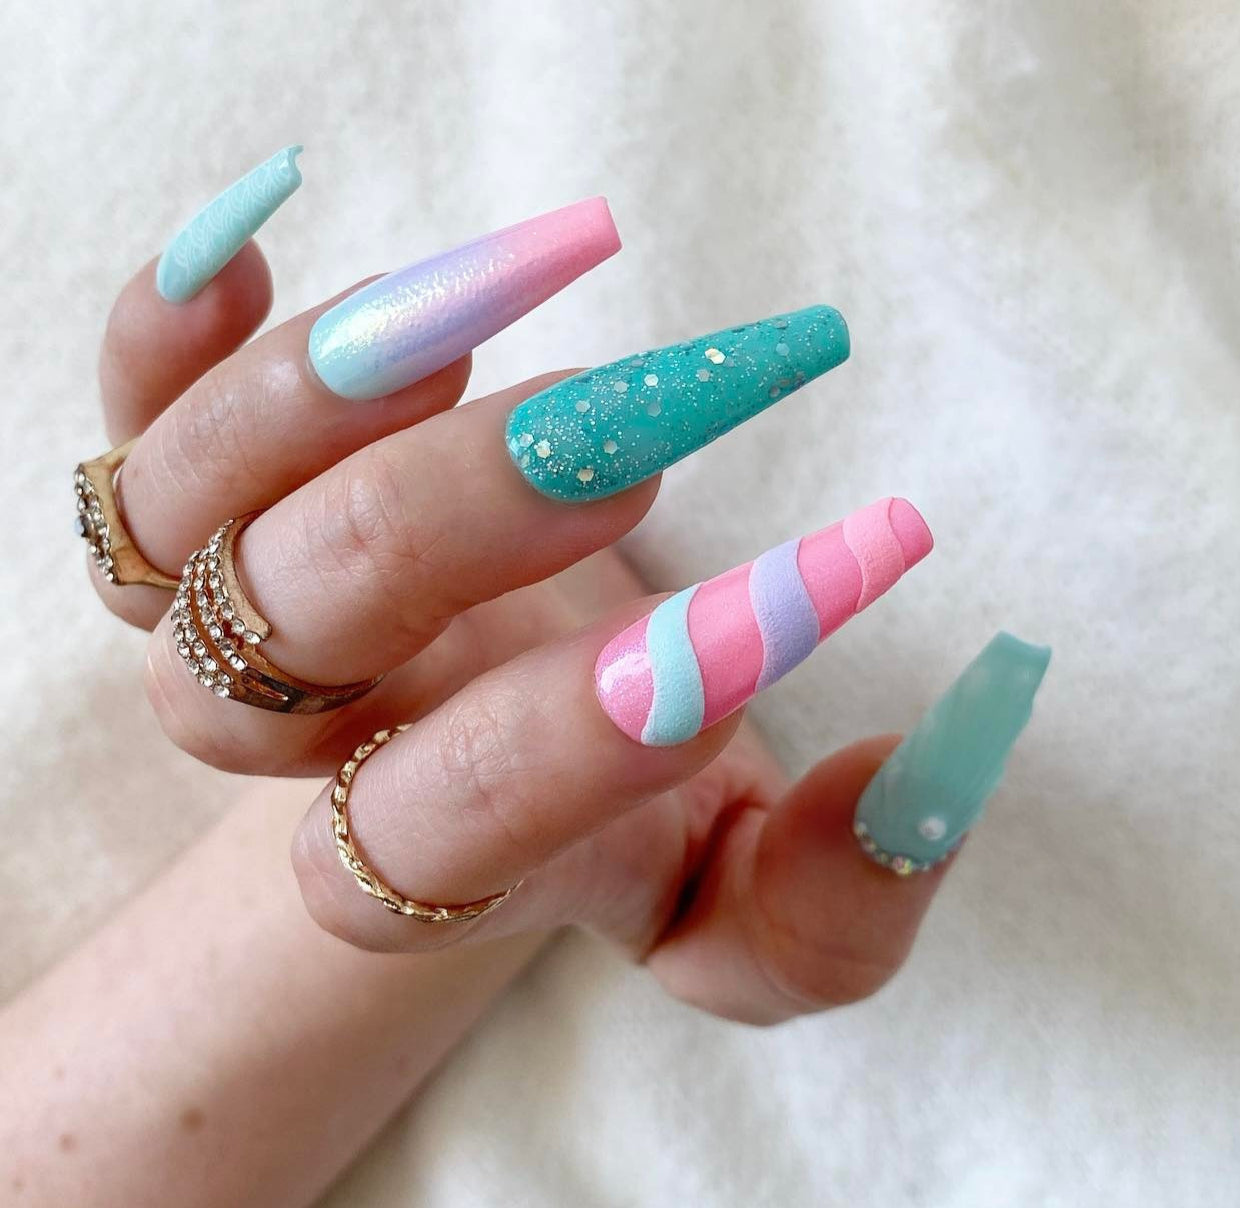 Manicure, Pink Gel Polish and Unicorn on Nails Stock Photo - Image of  fingers, care: 185529546